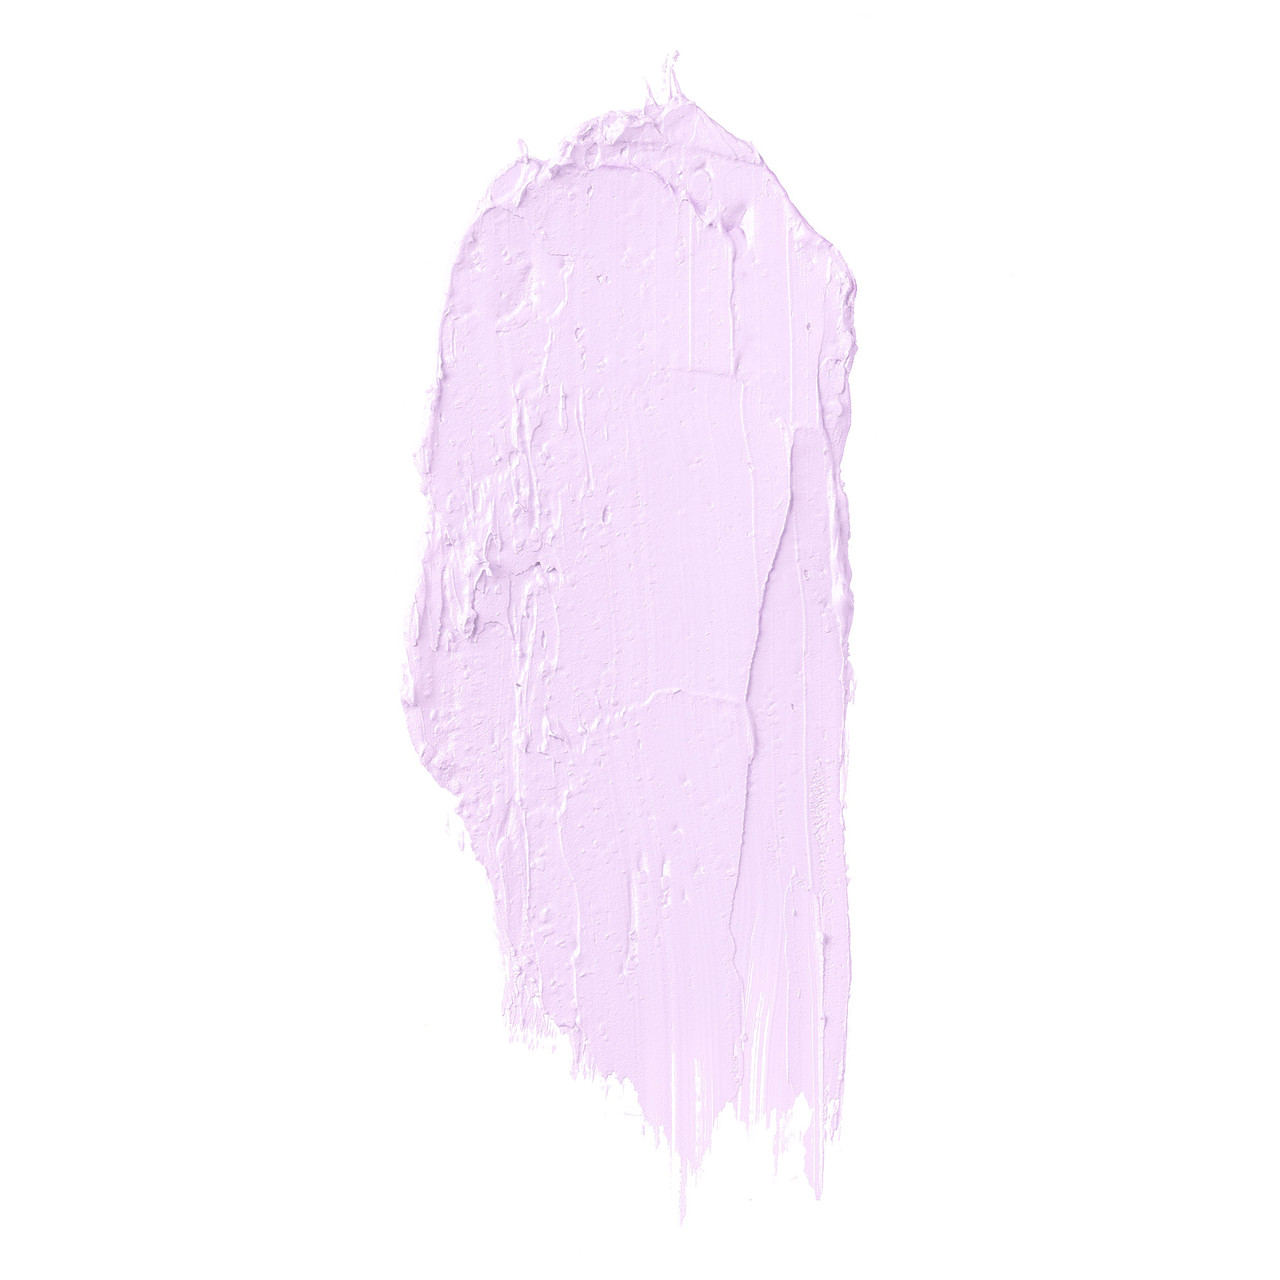 Mehron CreamBlend™ Stick Pastel Purple